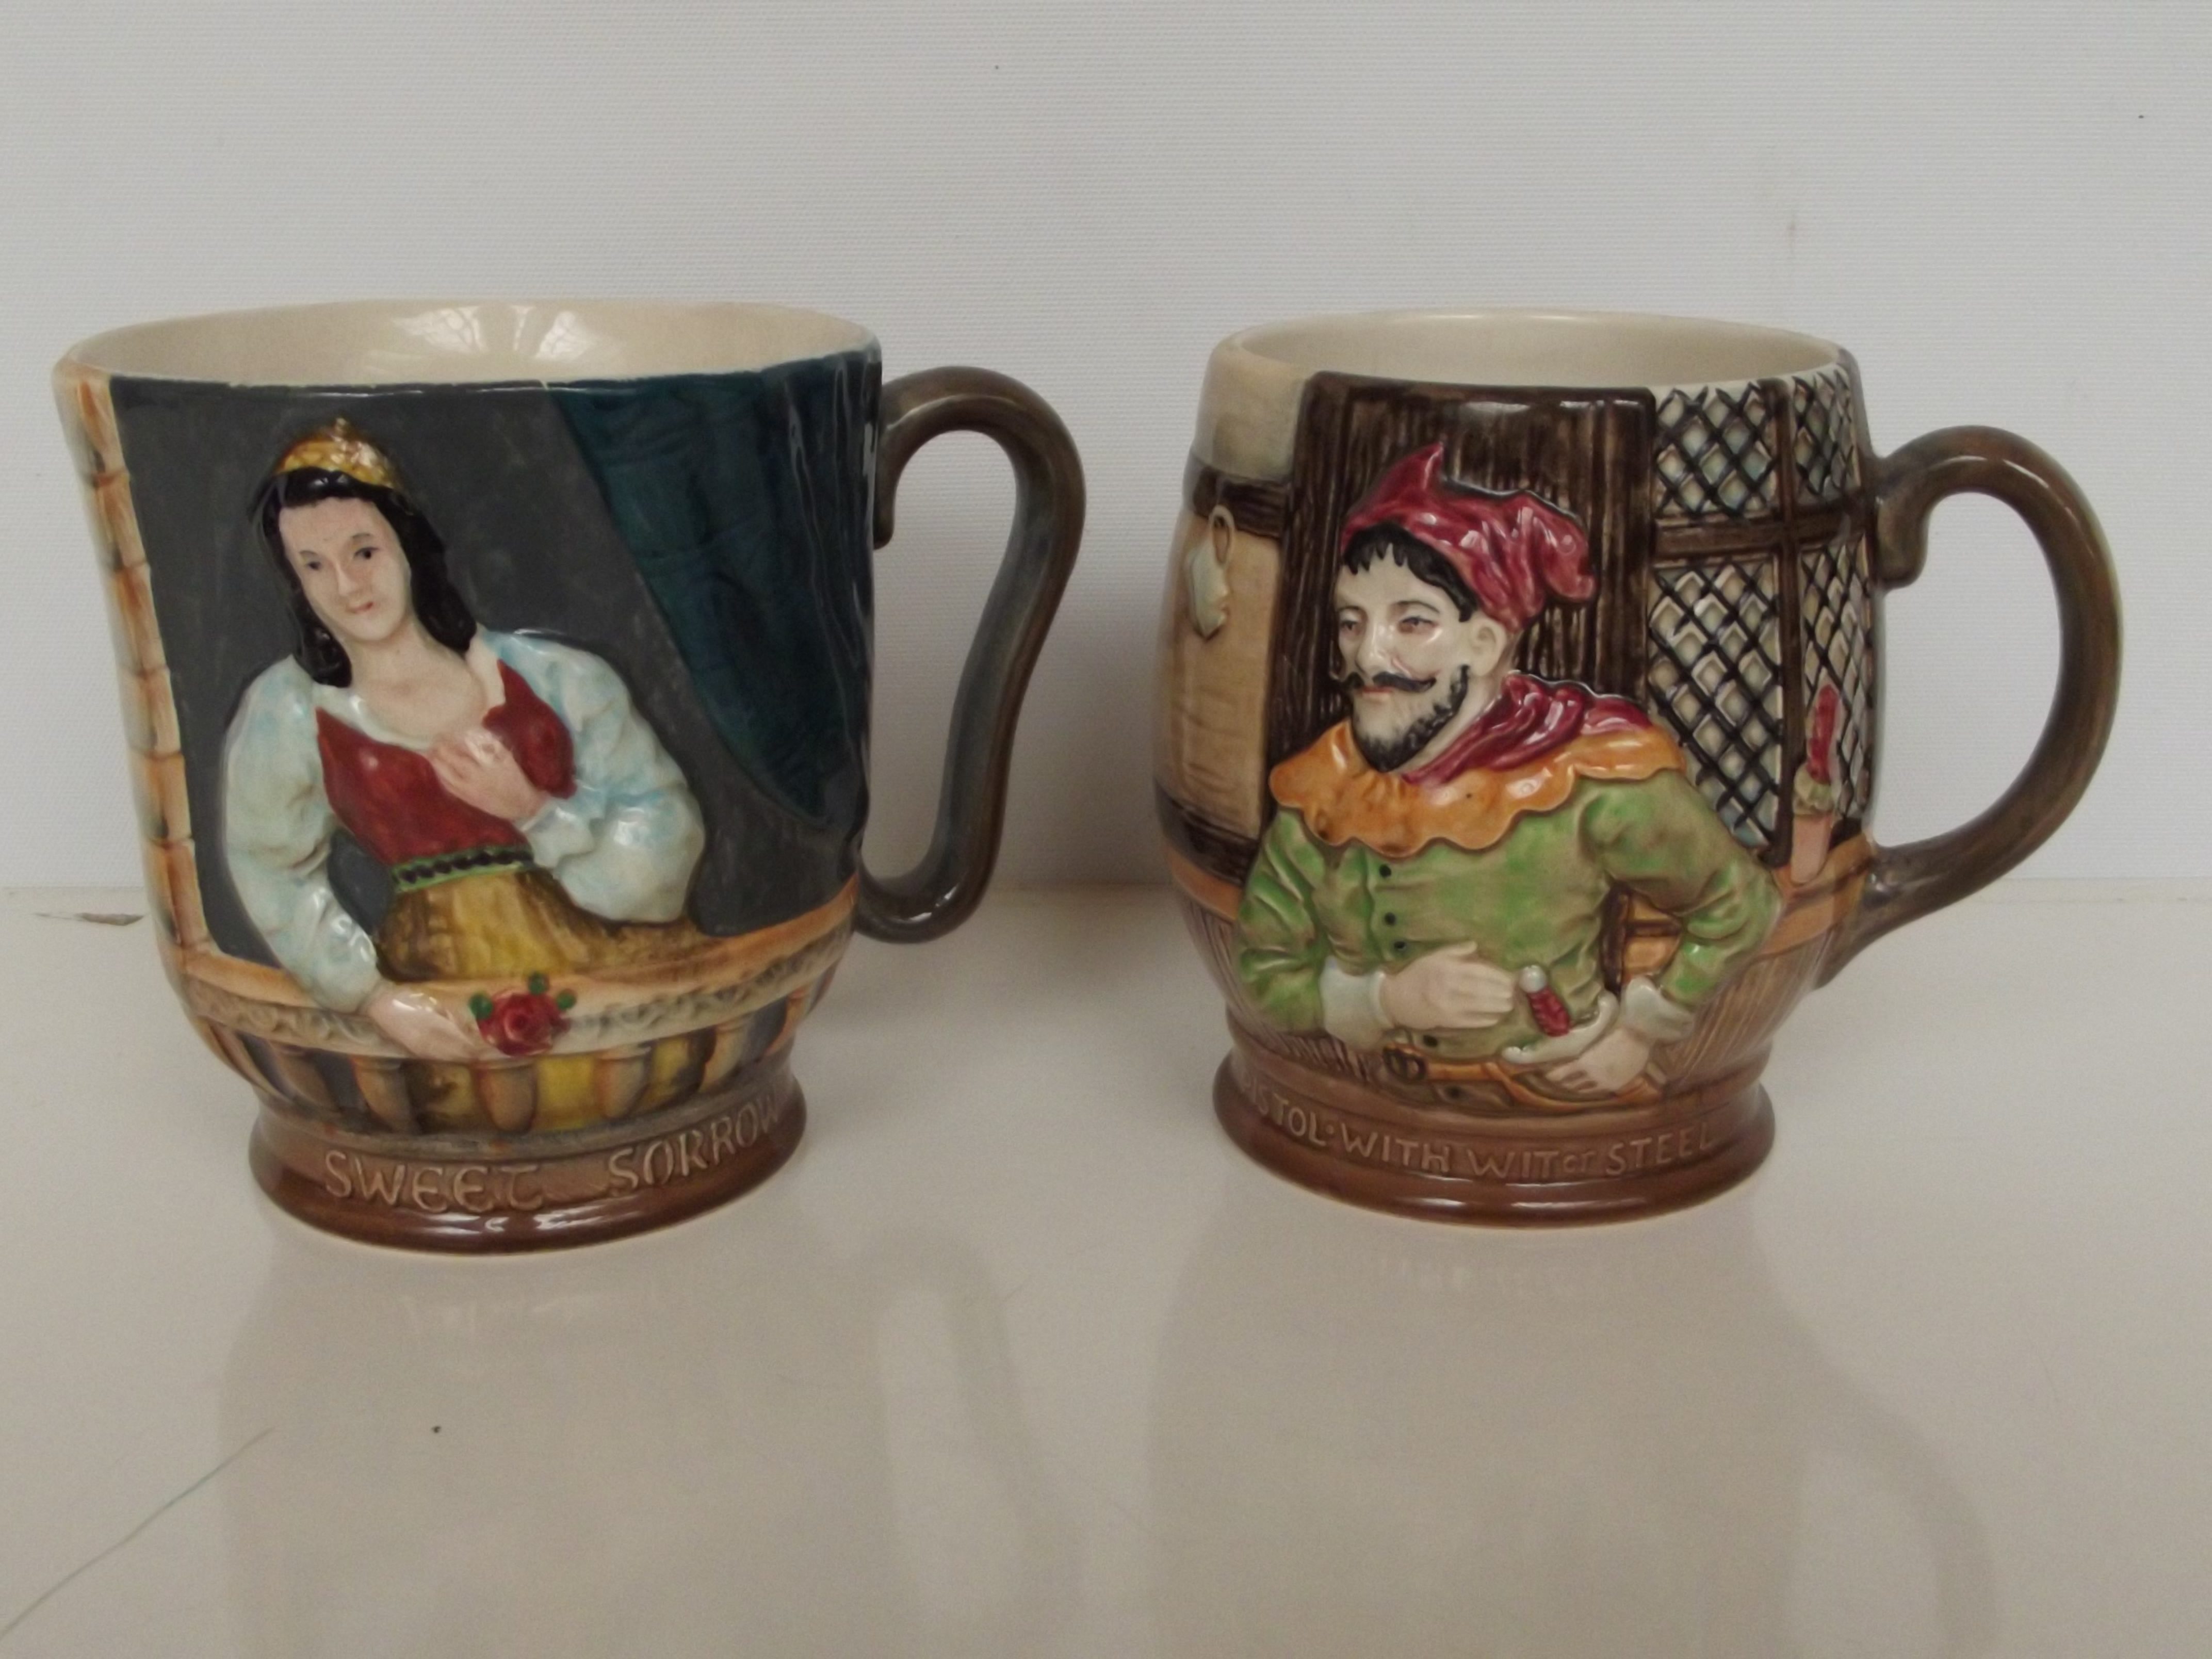 Two Beswick mugs, "Sweet sorrow" and "Merry Wives